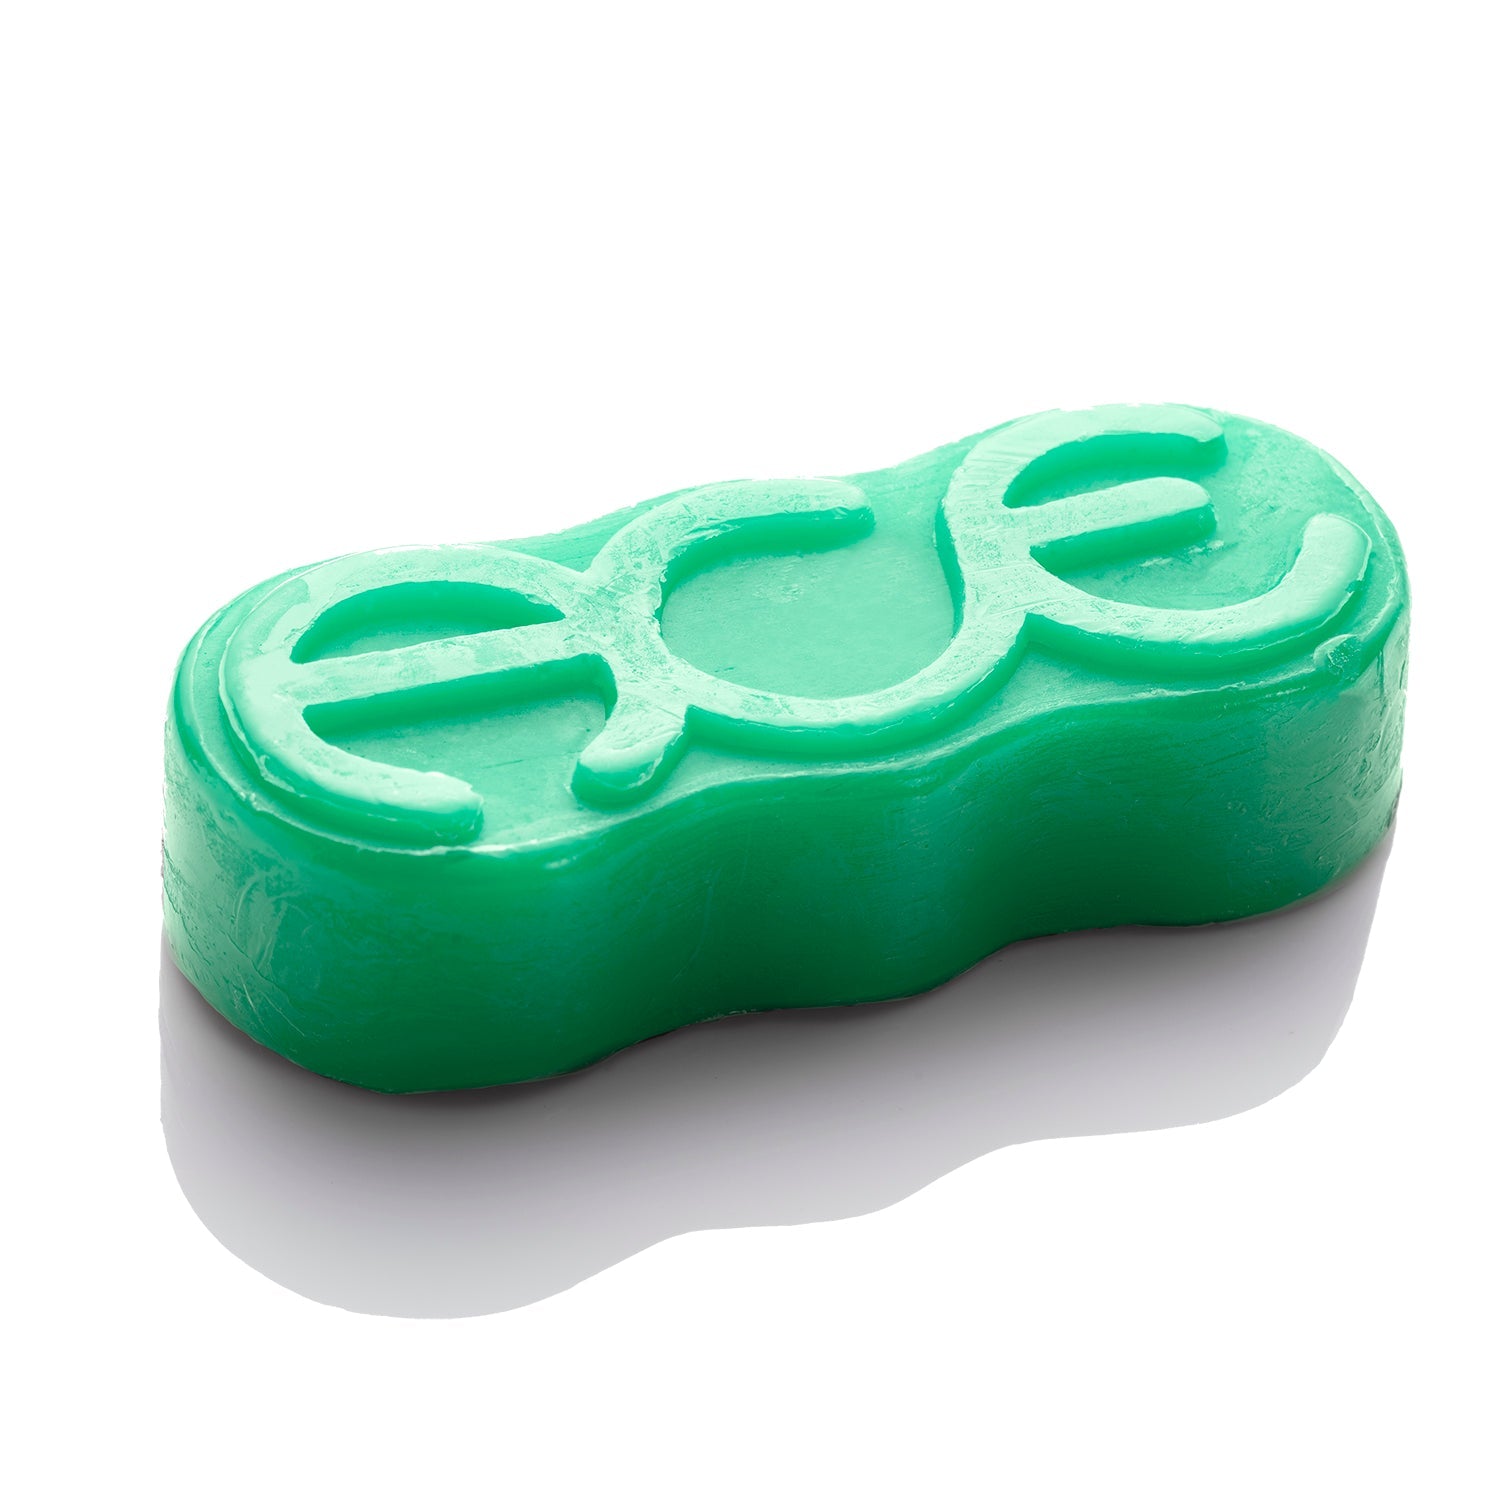 ACE green skate wax - SkatebruhSG